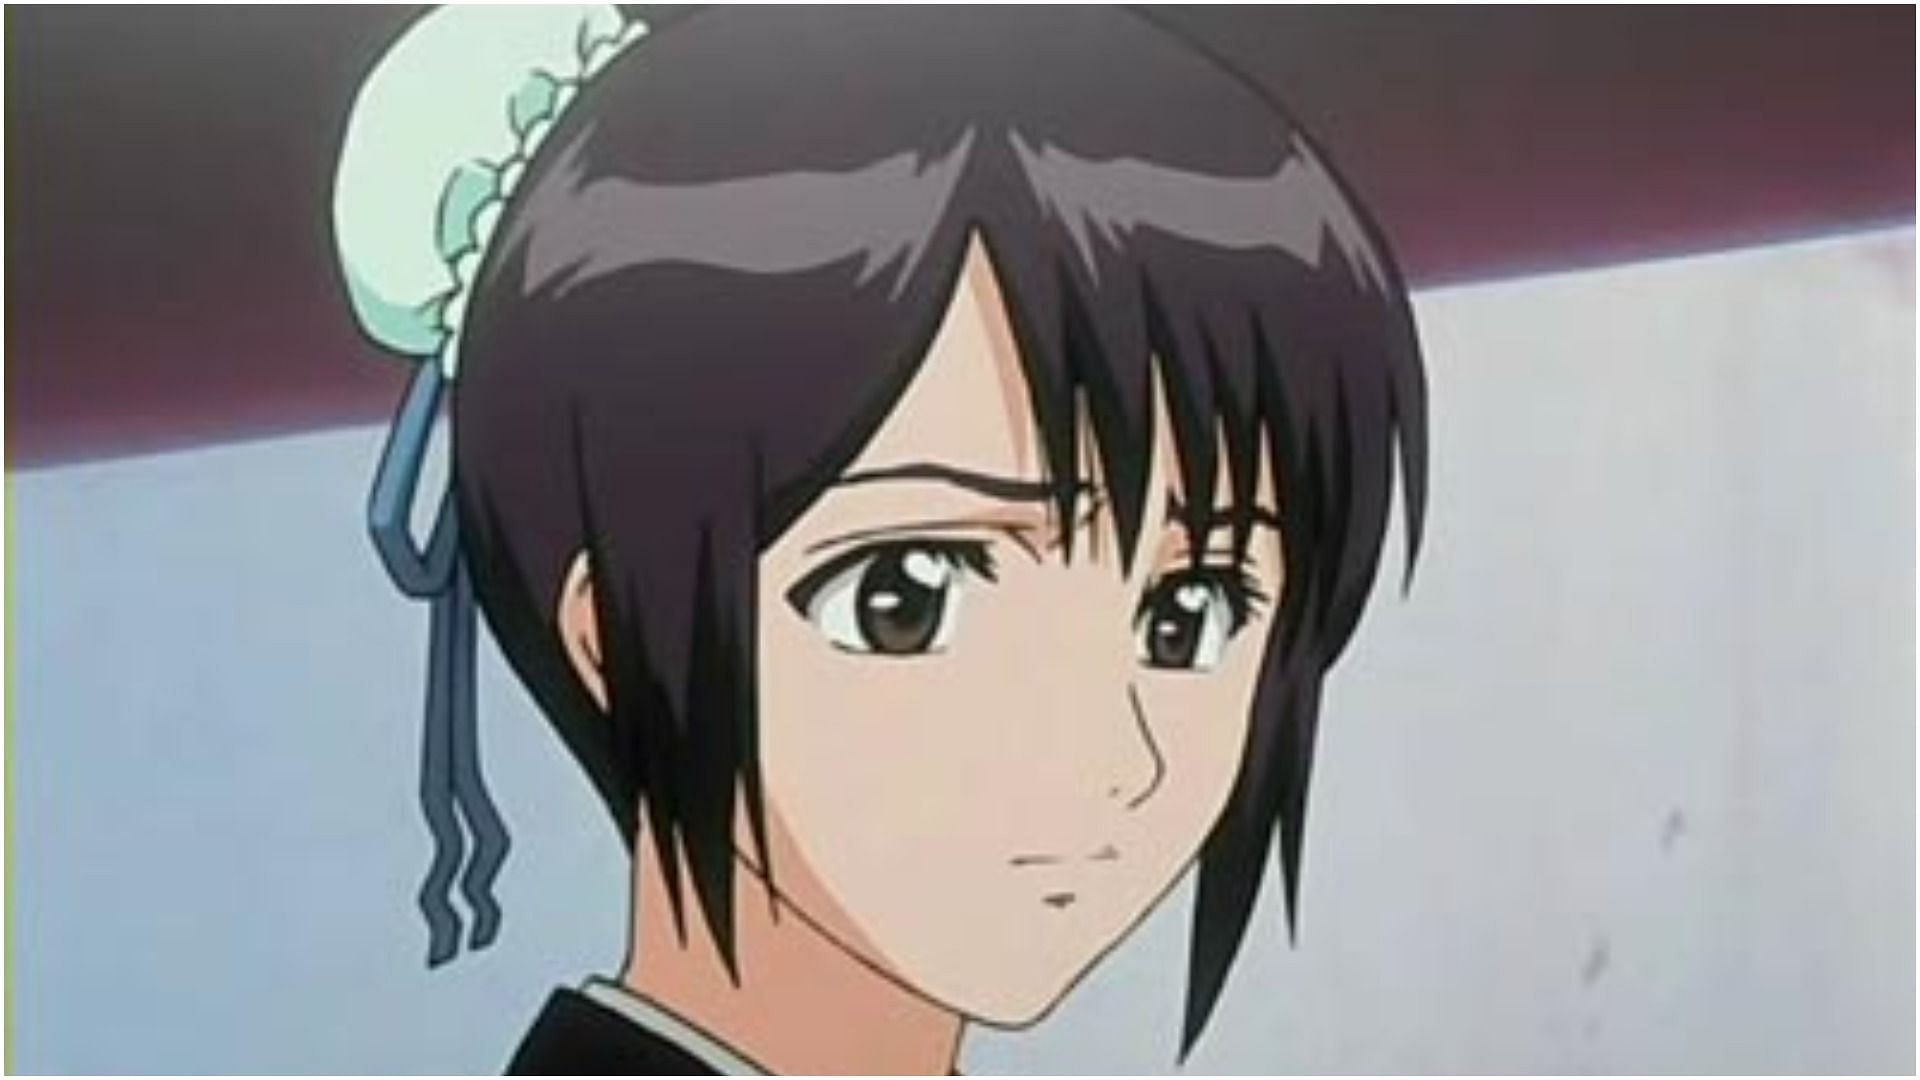 Momo Hinamori as seen in the anime (Image via Studio Pierrot)